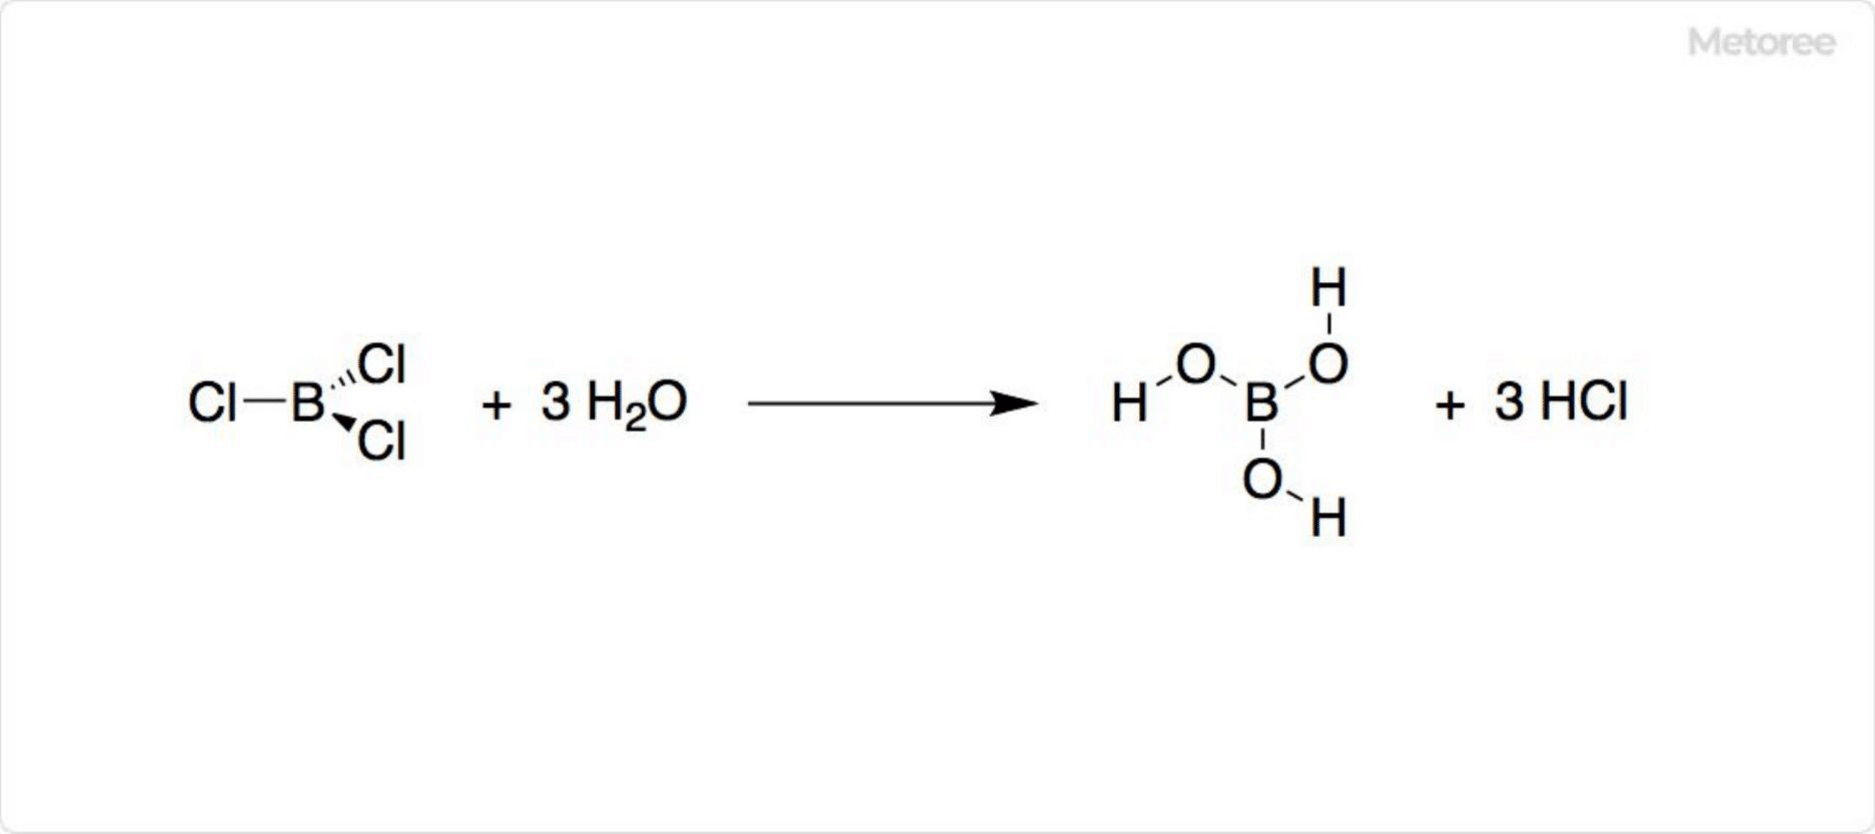 Figure 2. Hydrolysis of Boron Trichloride